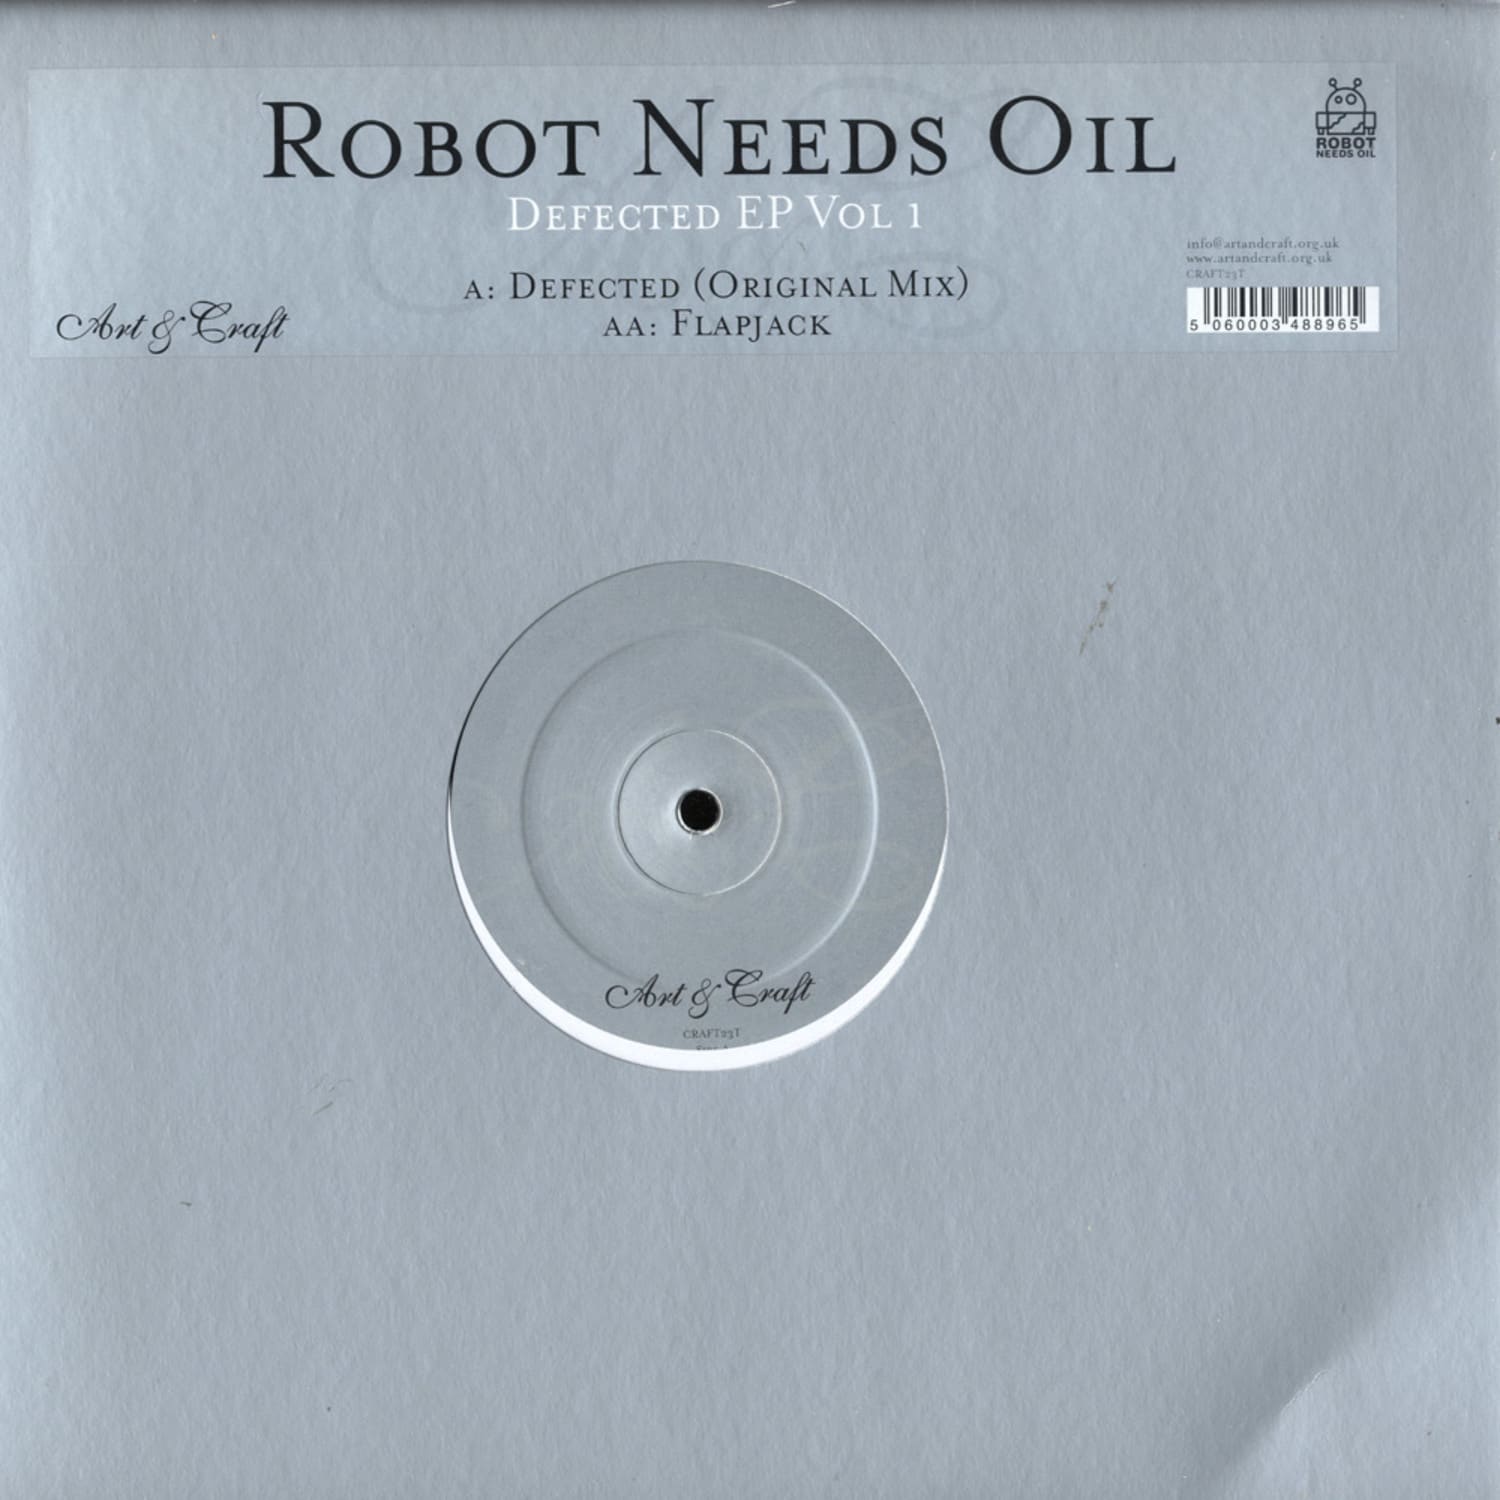 Robot Needs Oil - THE DEFECTED EP VOL. 1